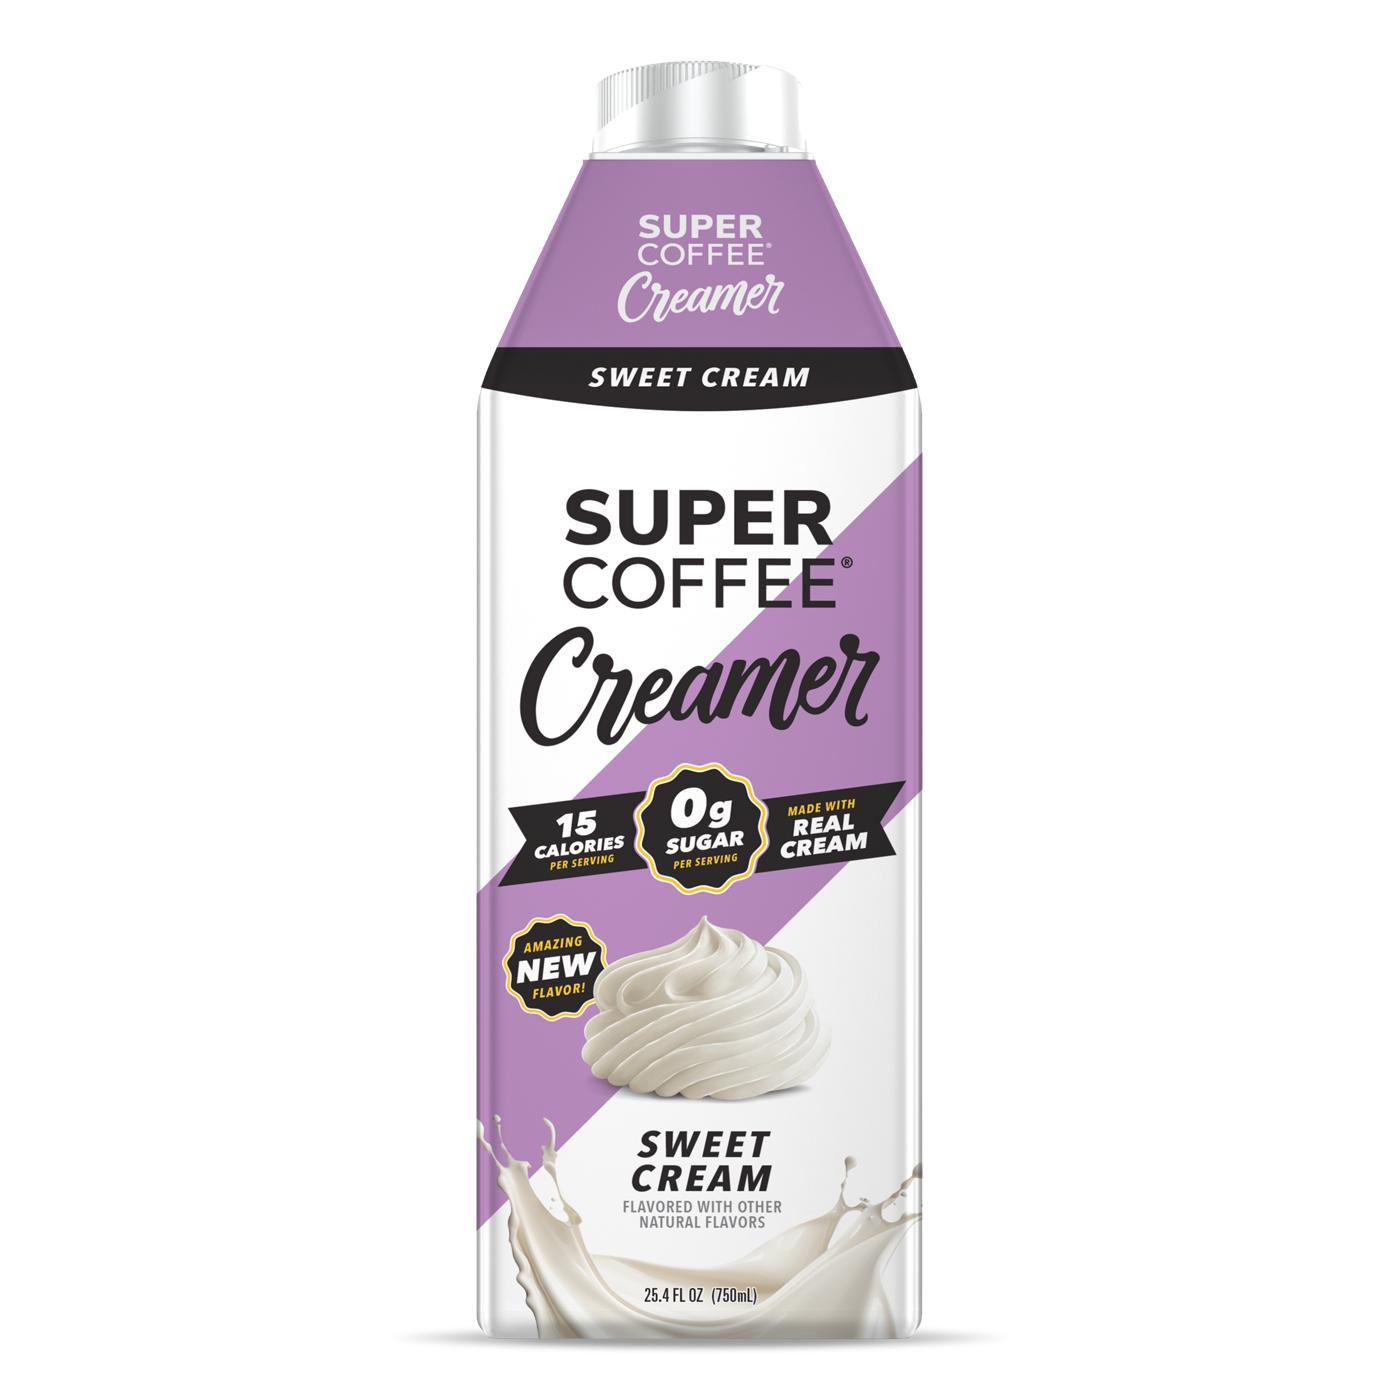 Super Coffee Super Creamer - Sweet Cream; image 1 of 3